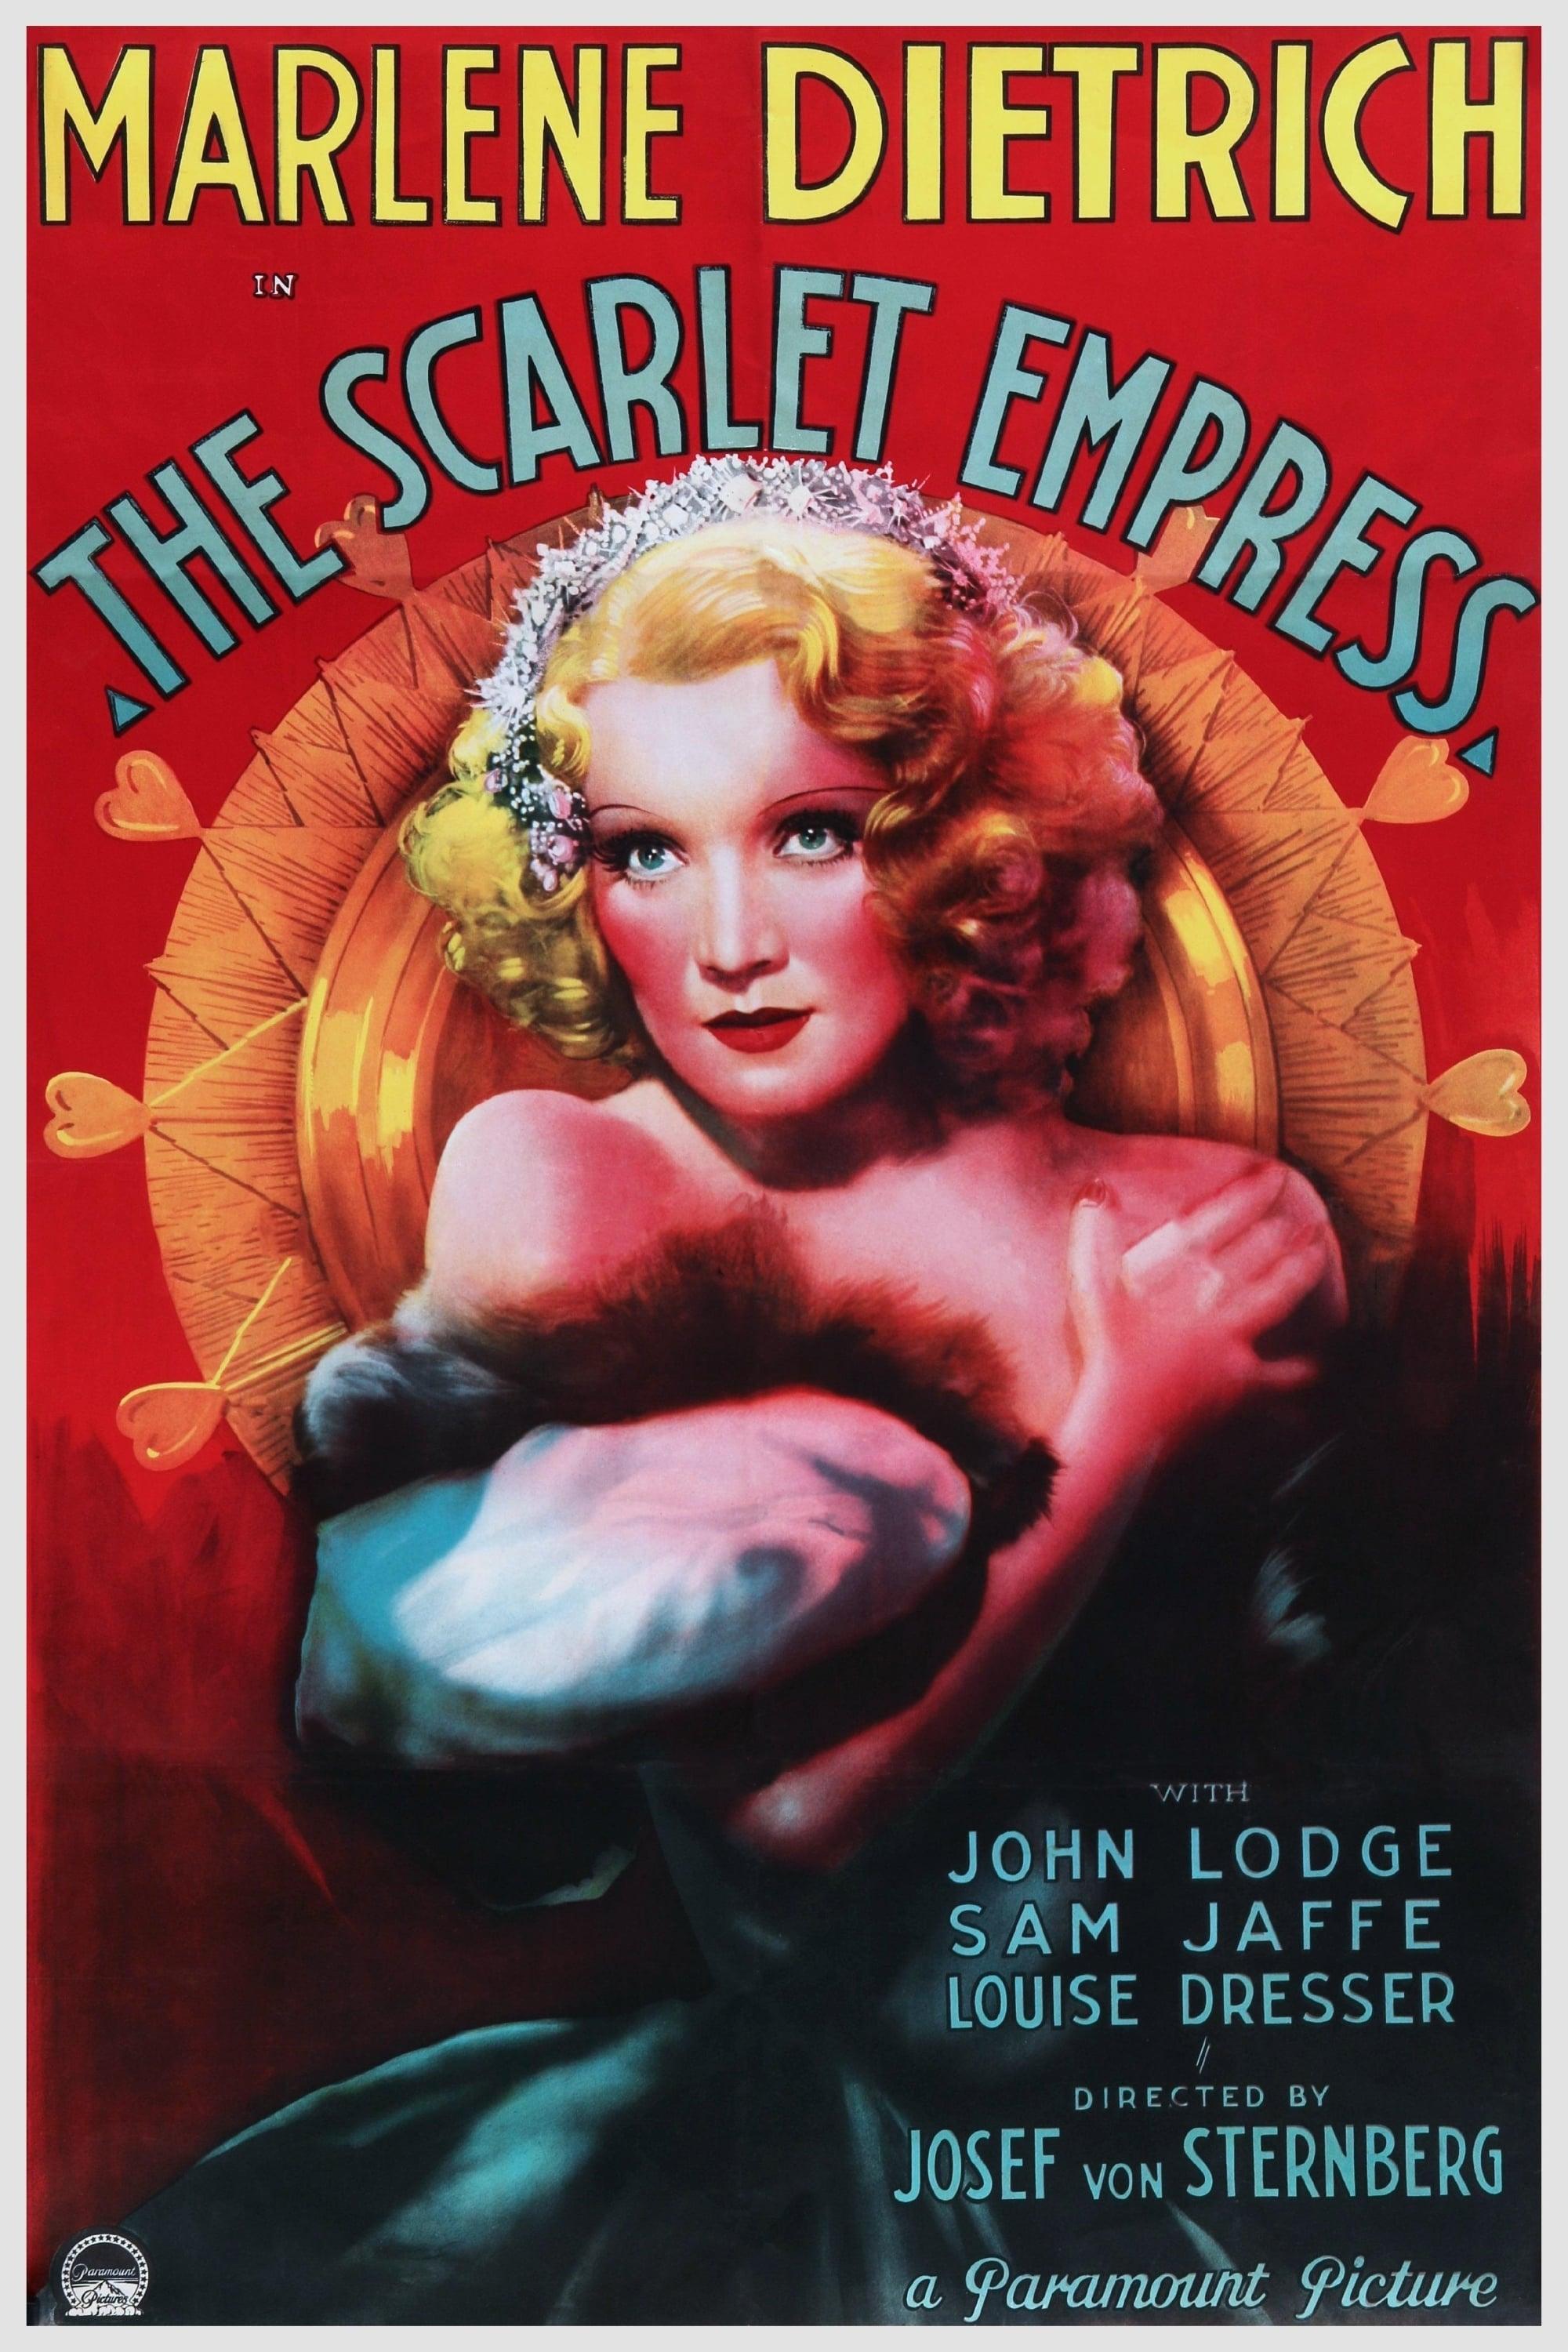 The Scarlet Empress poster